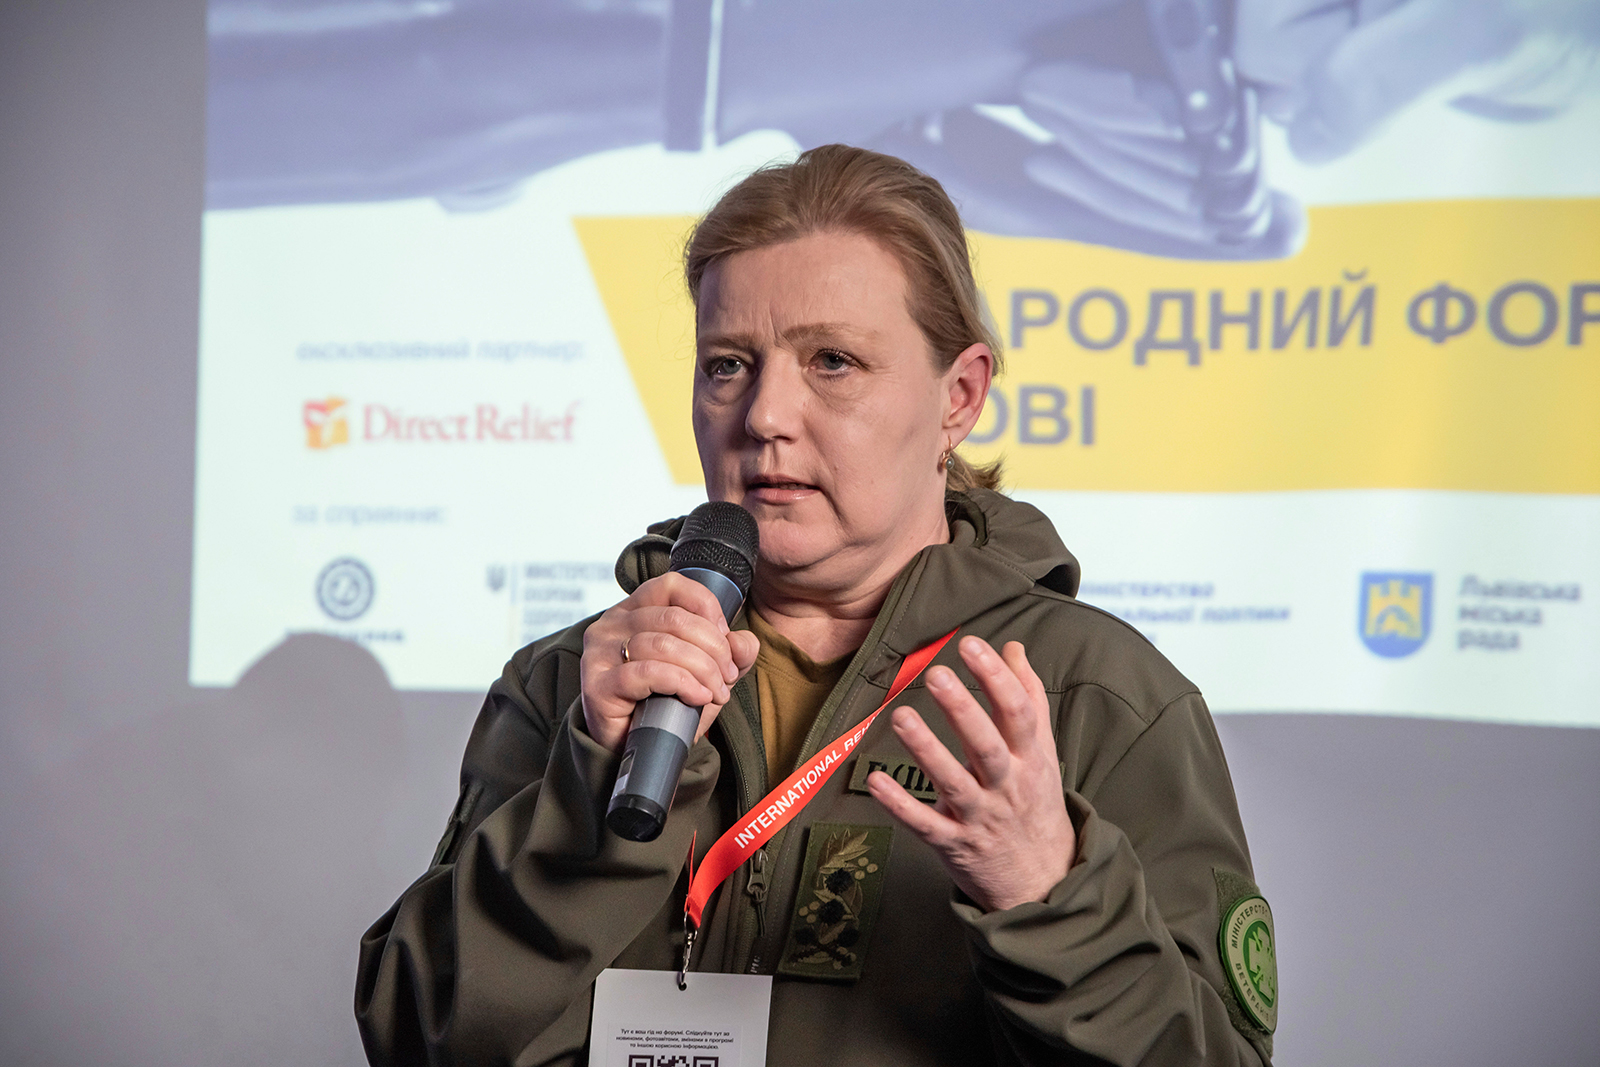 Yulia Laputina gives a speech in Lviv, Ukraine on April 12.